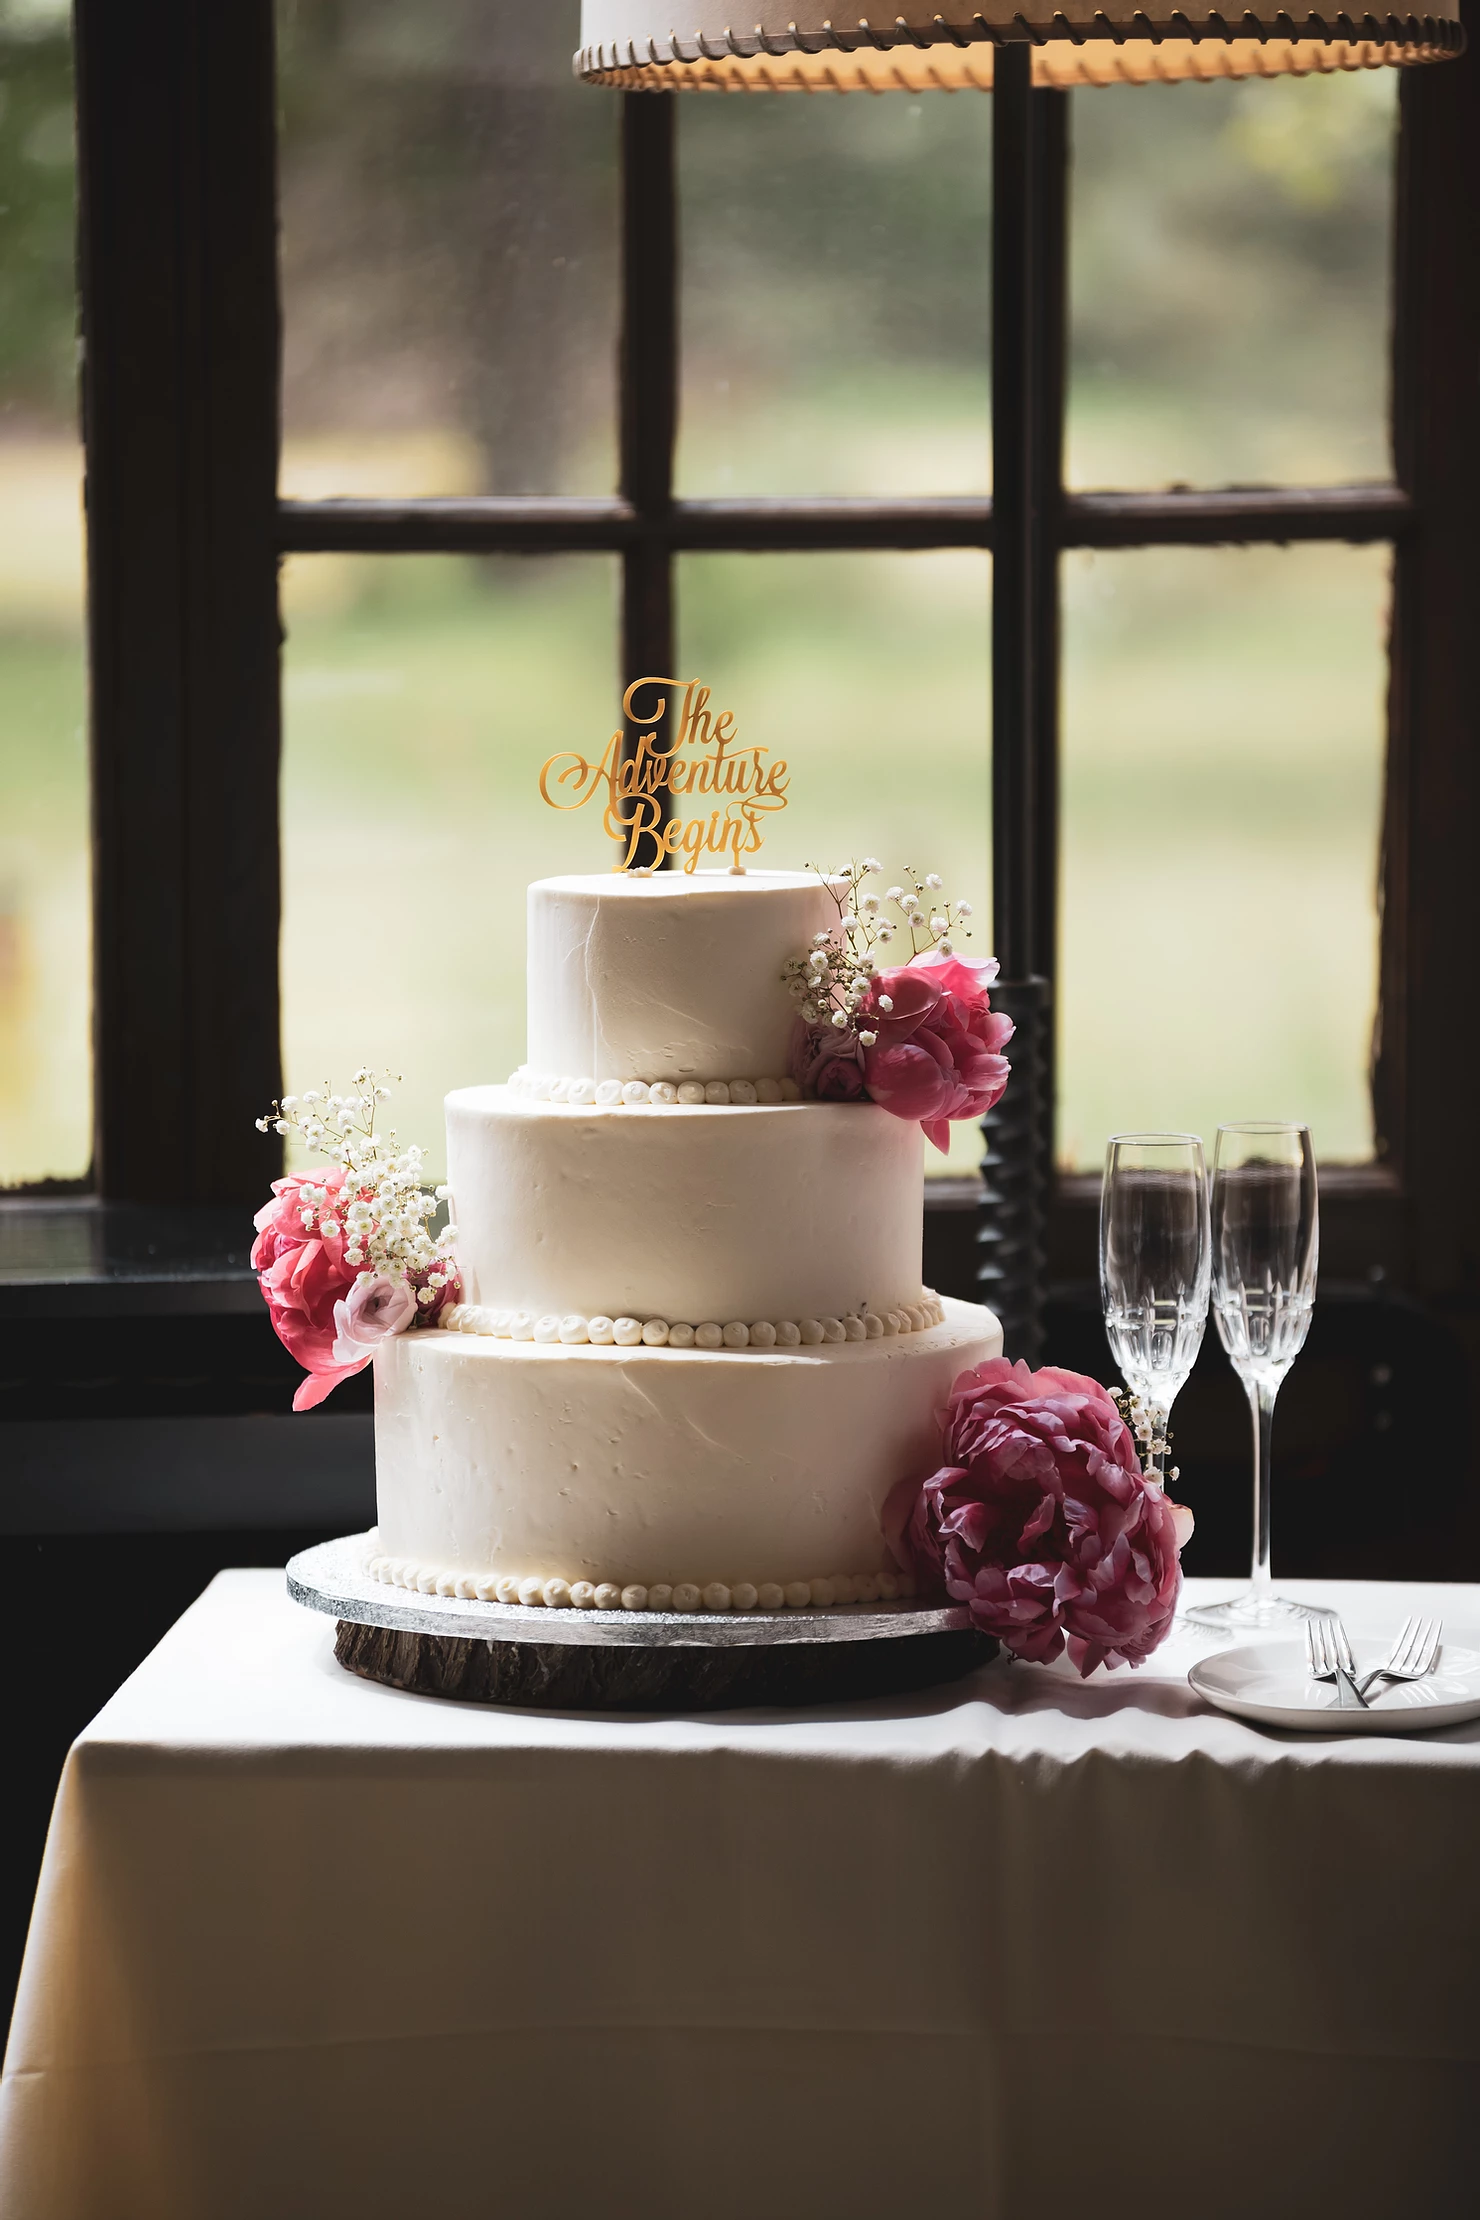 Can You Freeze A Wedding Cake?